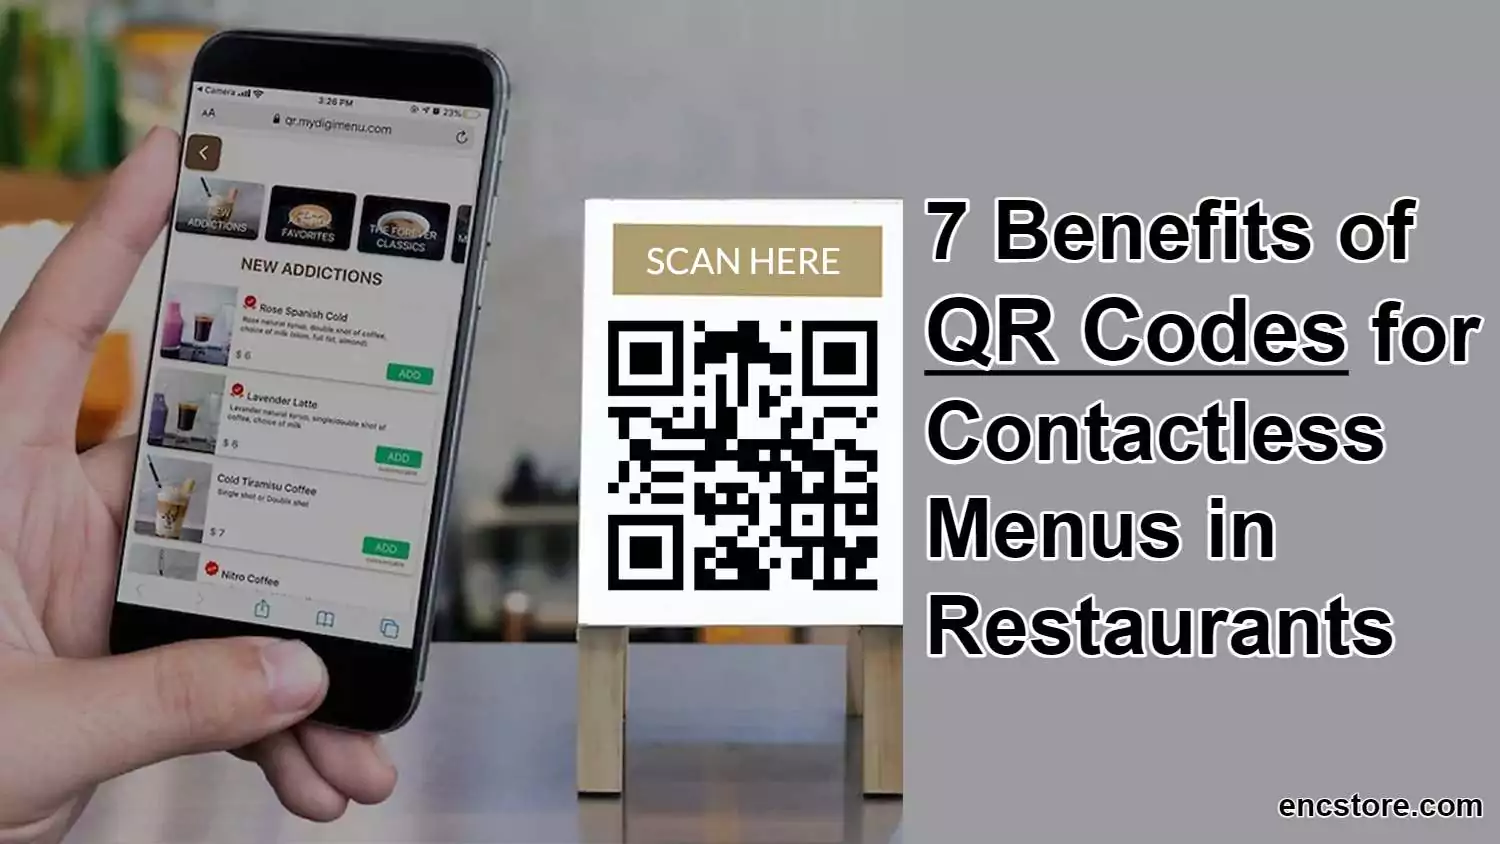 Benefits of QR Codes for Contactless Menus in Restaurants